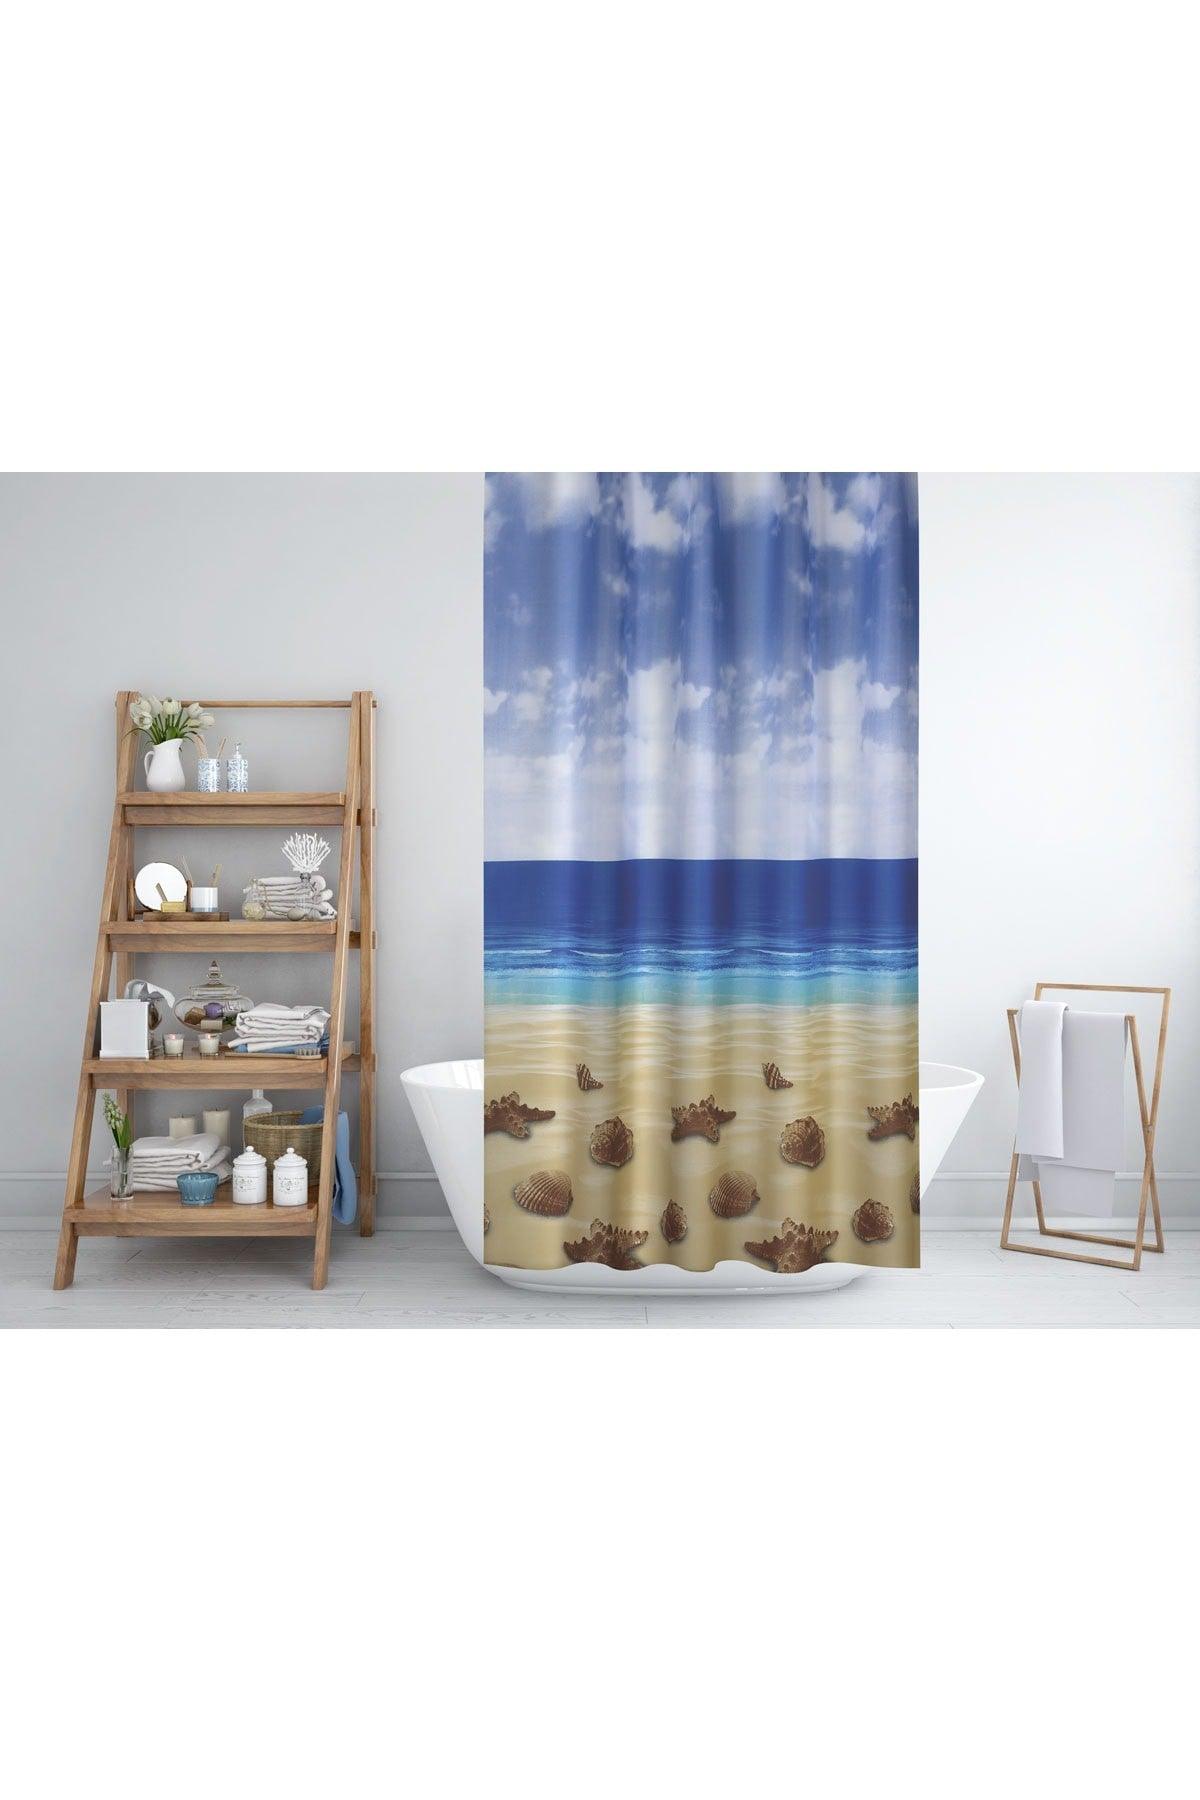 Brown Bathroom Curtain Sea And Sand Landscape Pattern Shower Curtain Single Wing Bathroom Shower Curtain - Swordslife